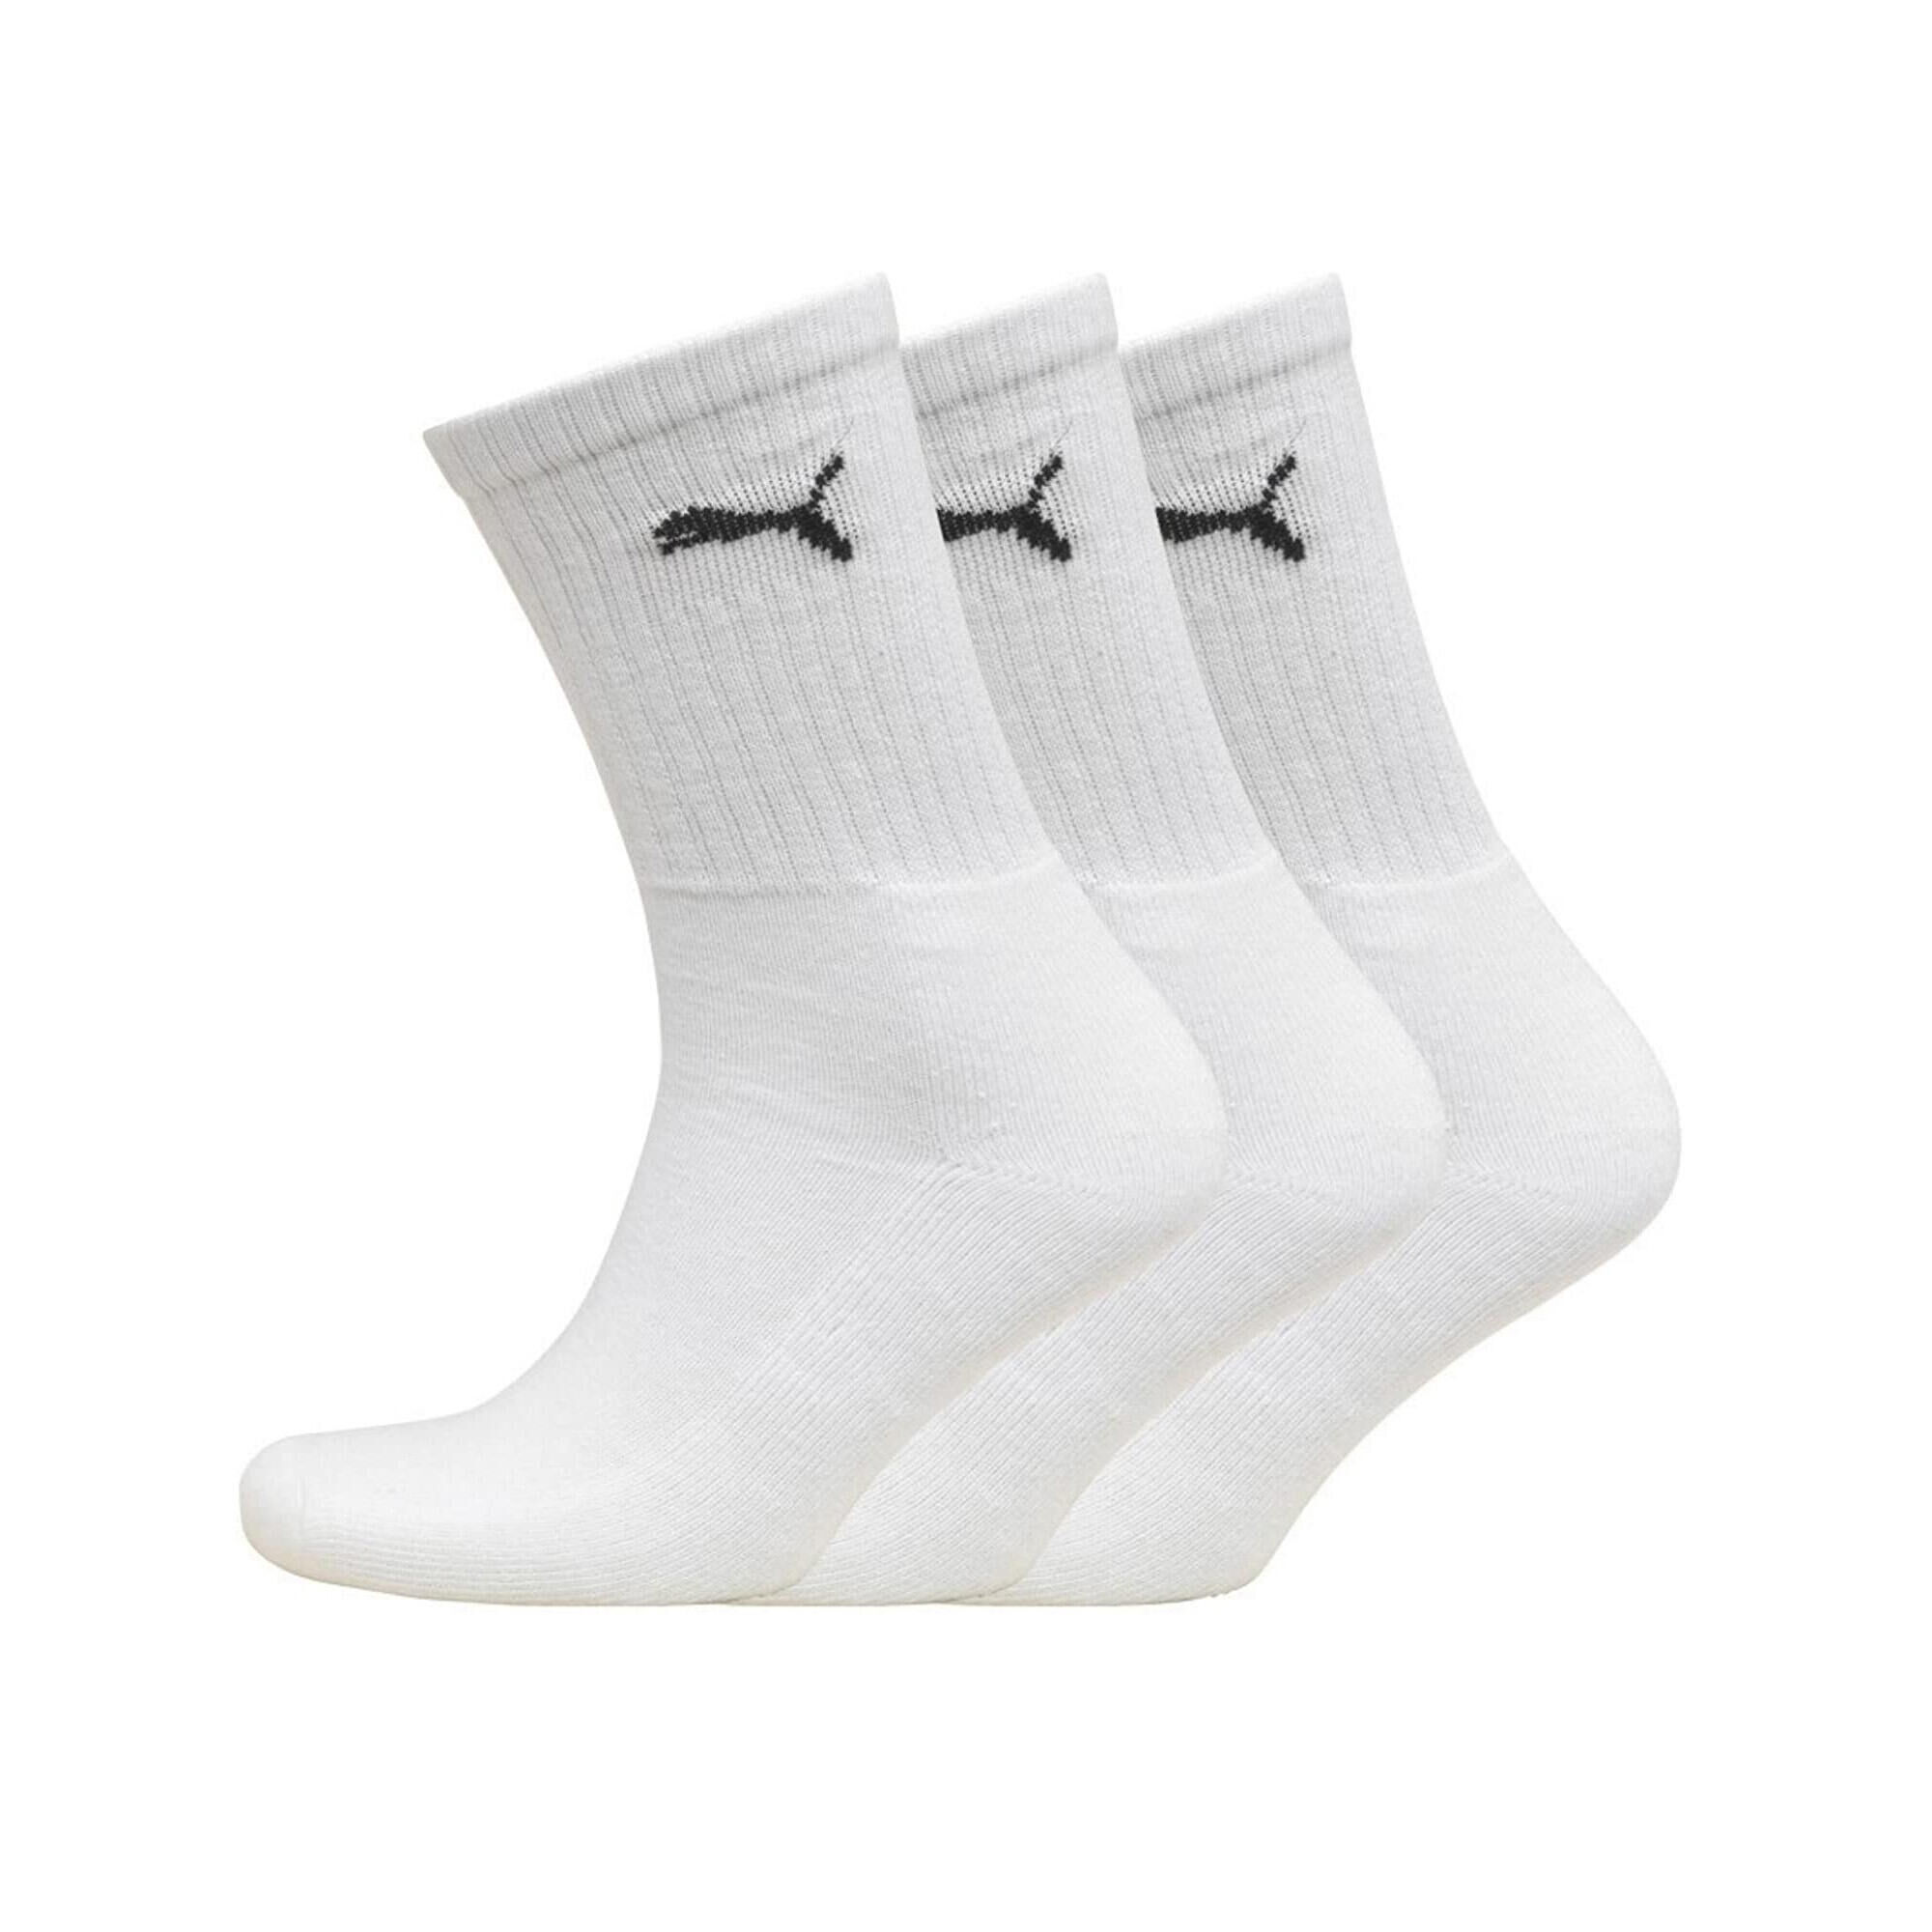 PUMA Crew Sport Socks 3 Pair Pack / Mens Socks (White)